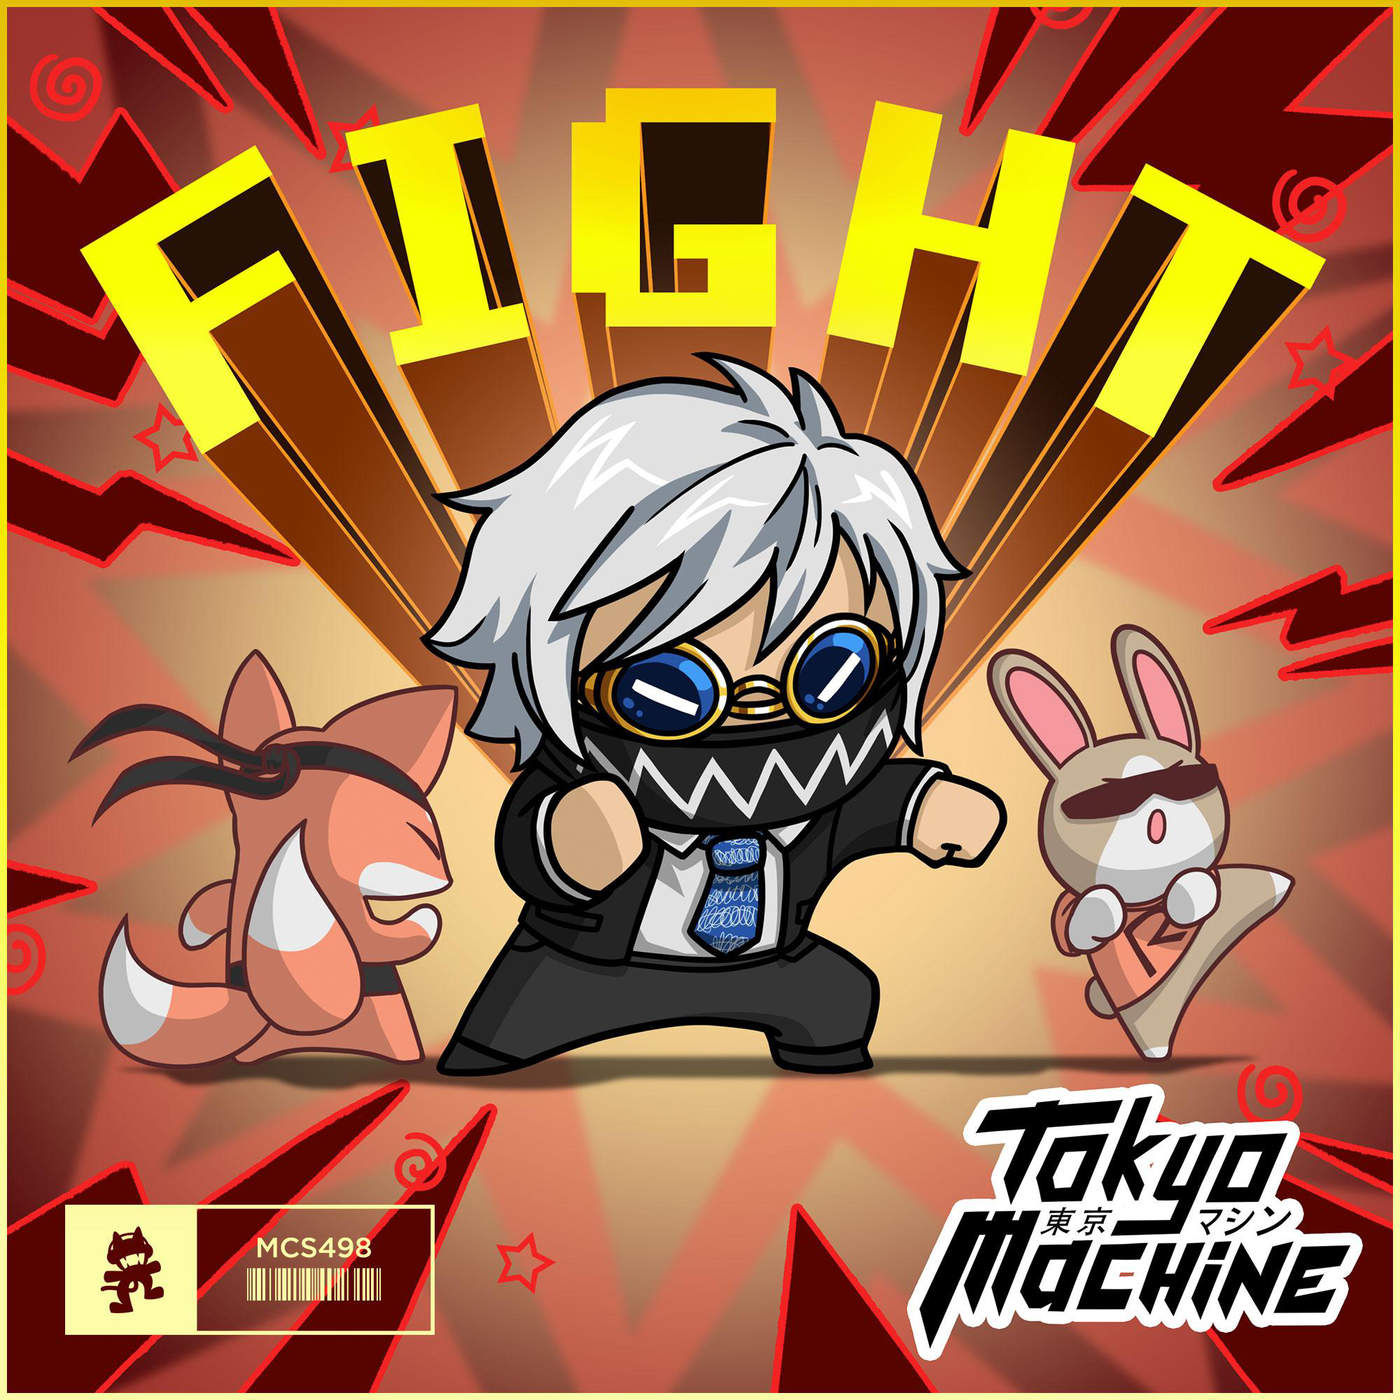 Tokyo Machine - FIGHT [Monstercat Release] (신남, 활기, 격렬, 비트, 8비트)